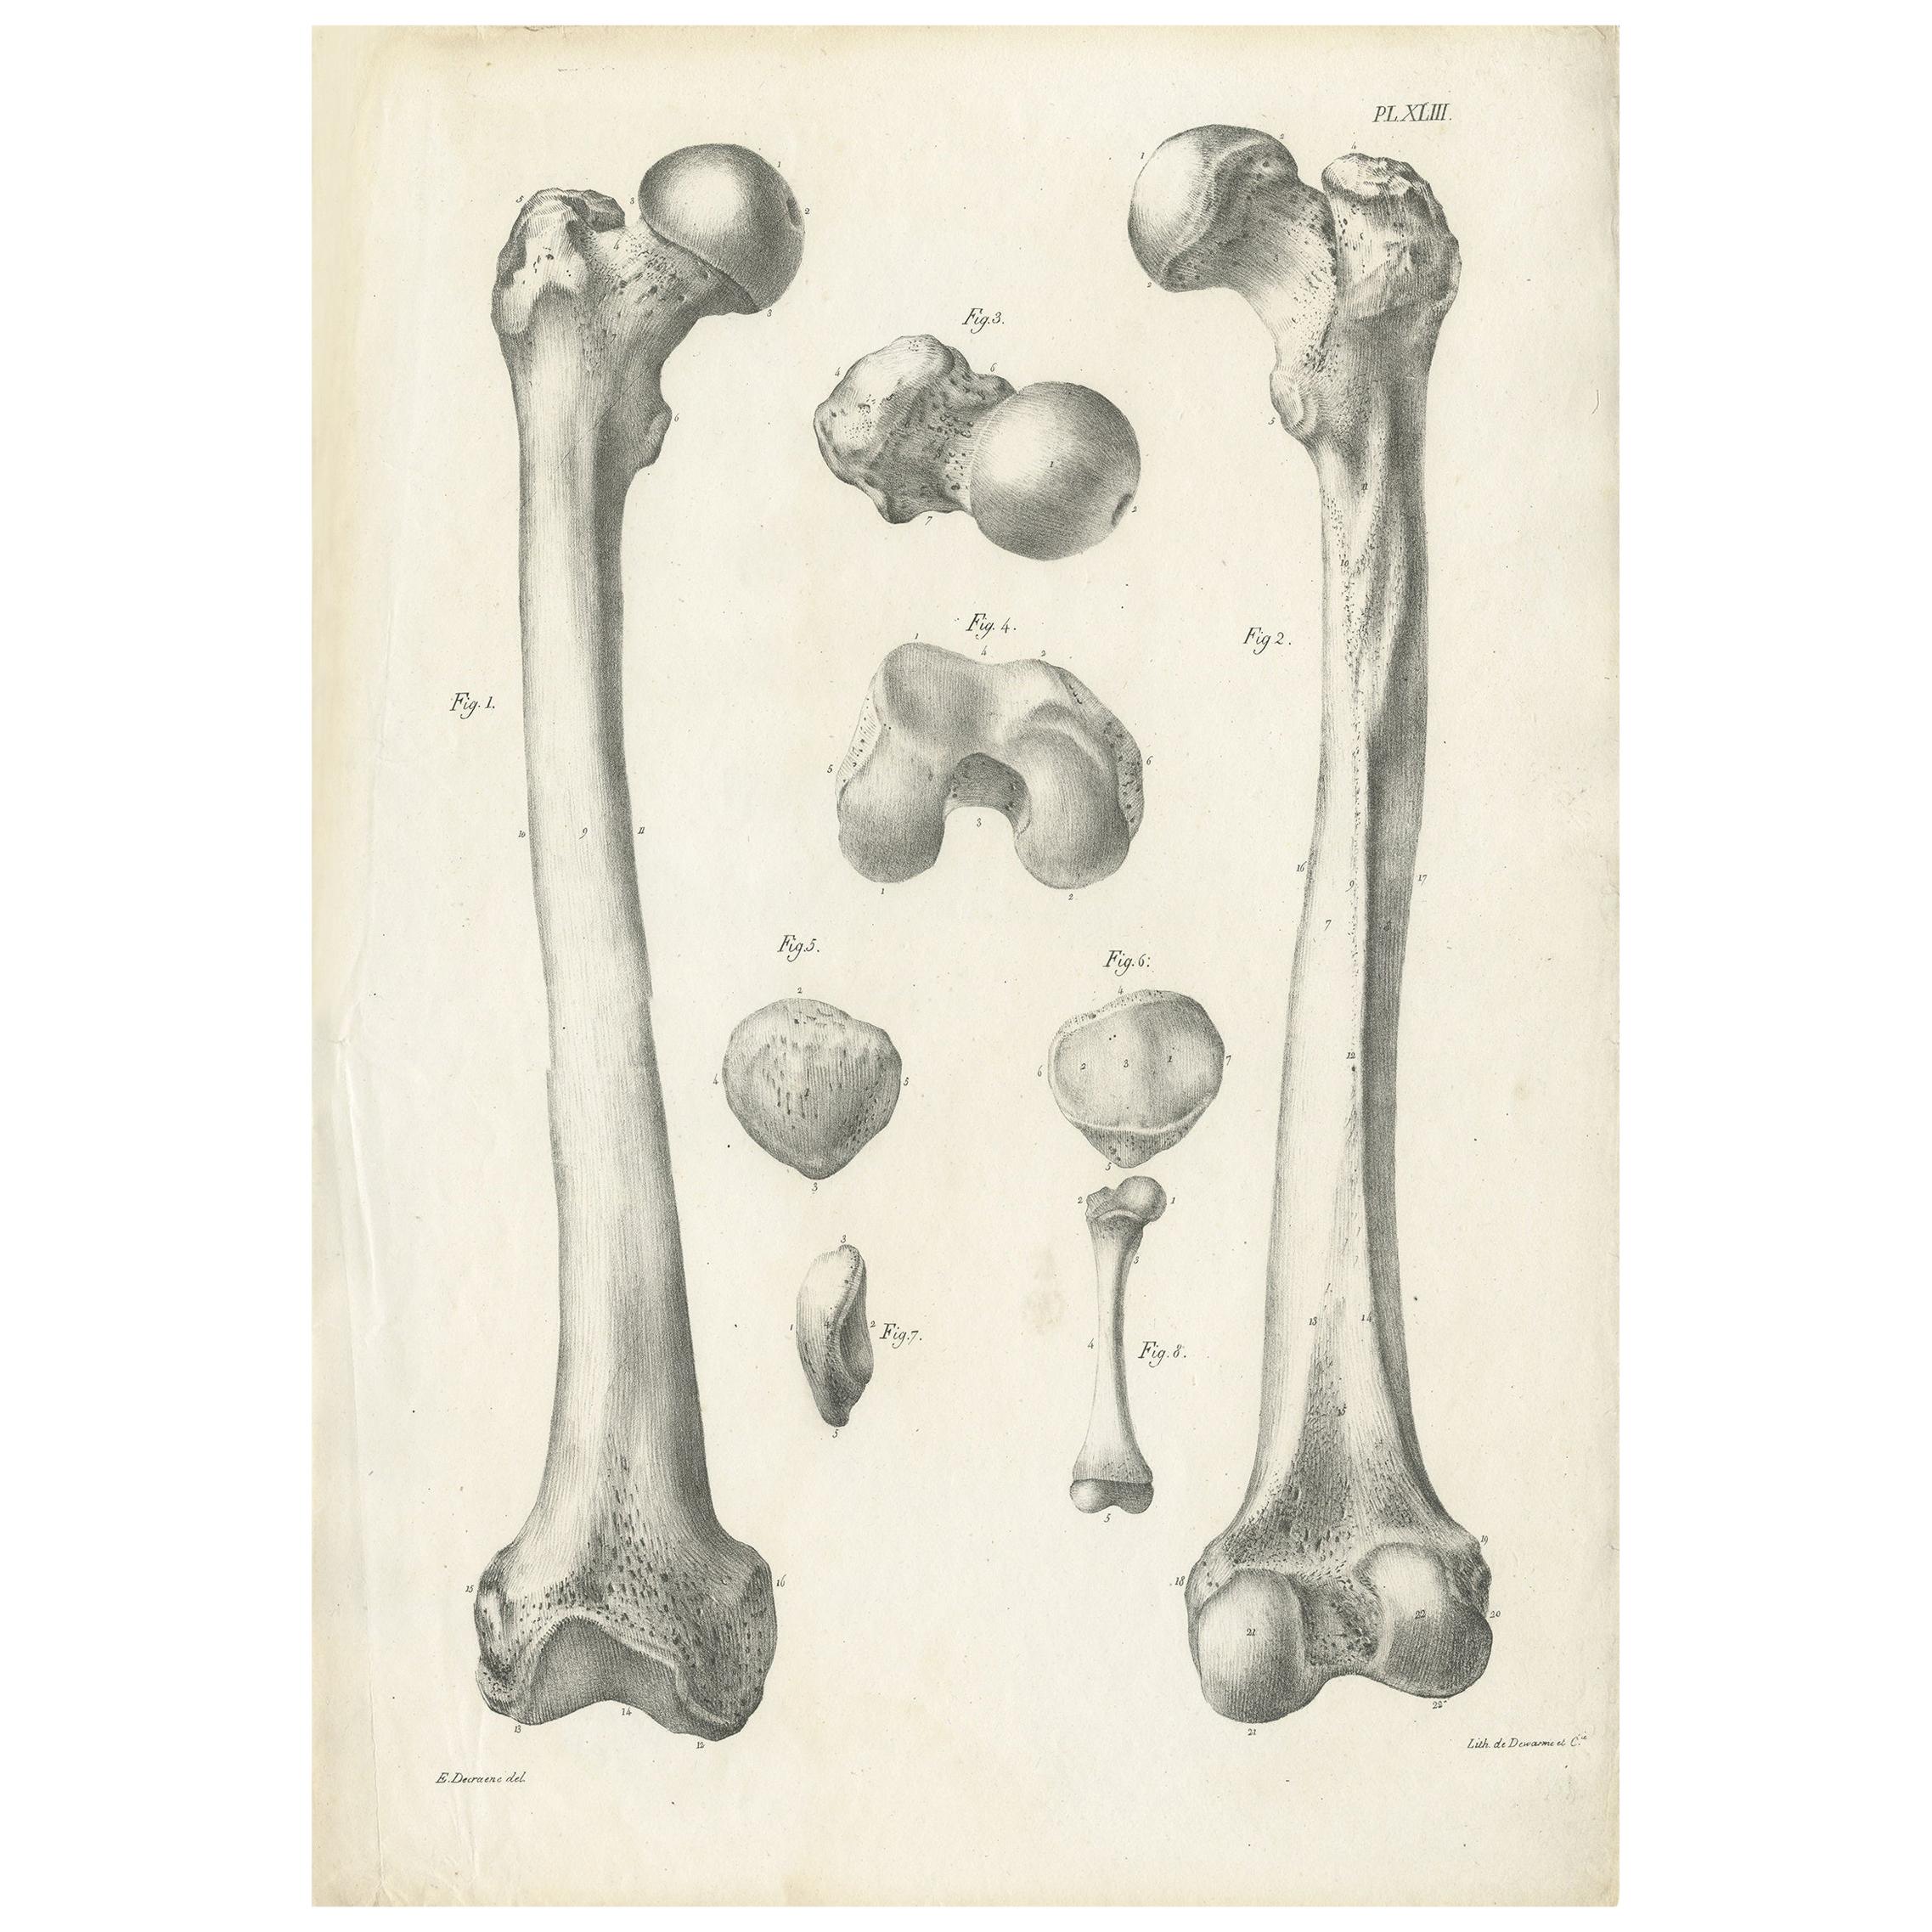 Antique Anatomy / Medical Print of the Femur Bones by Cloquet, '1821'